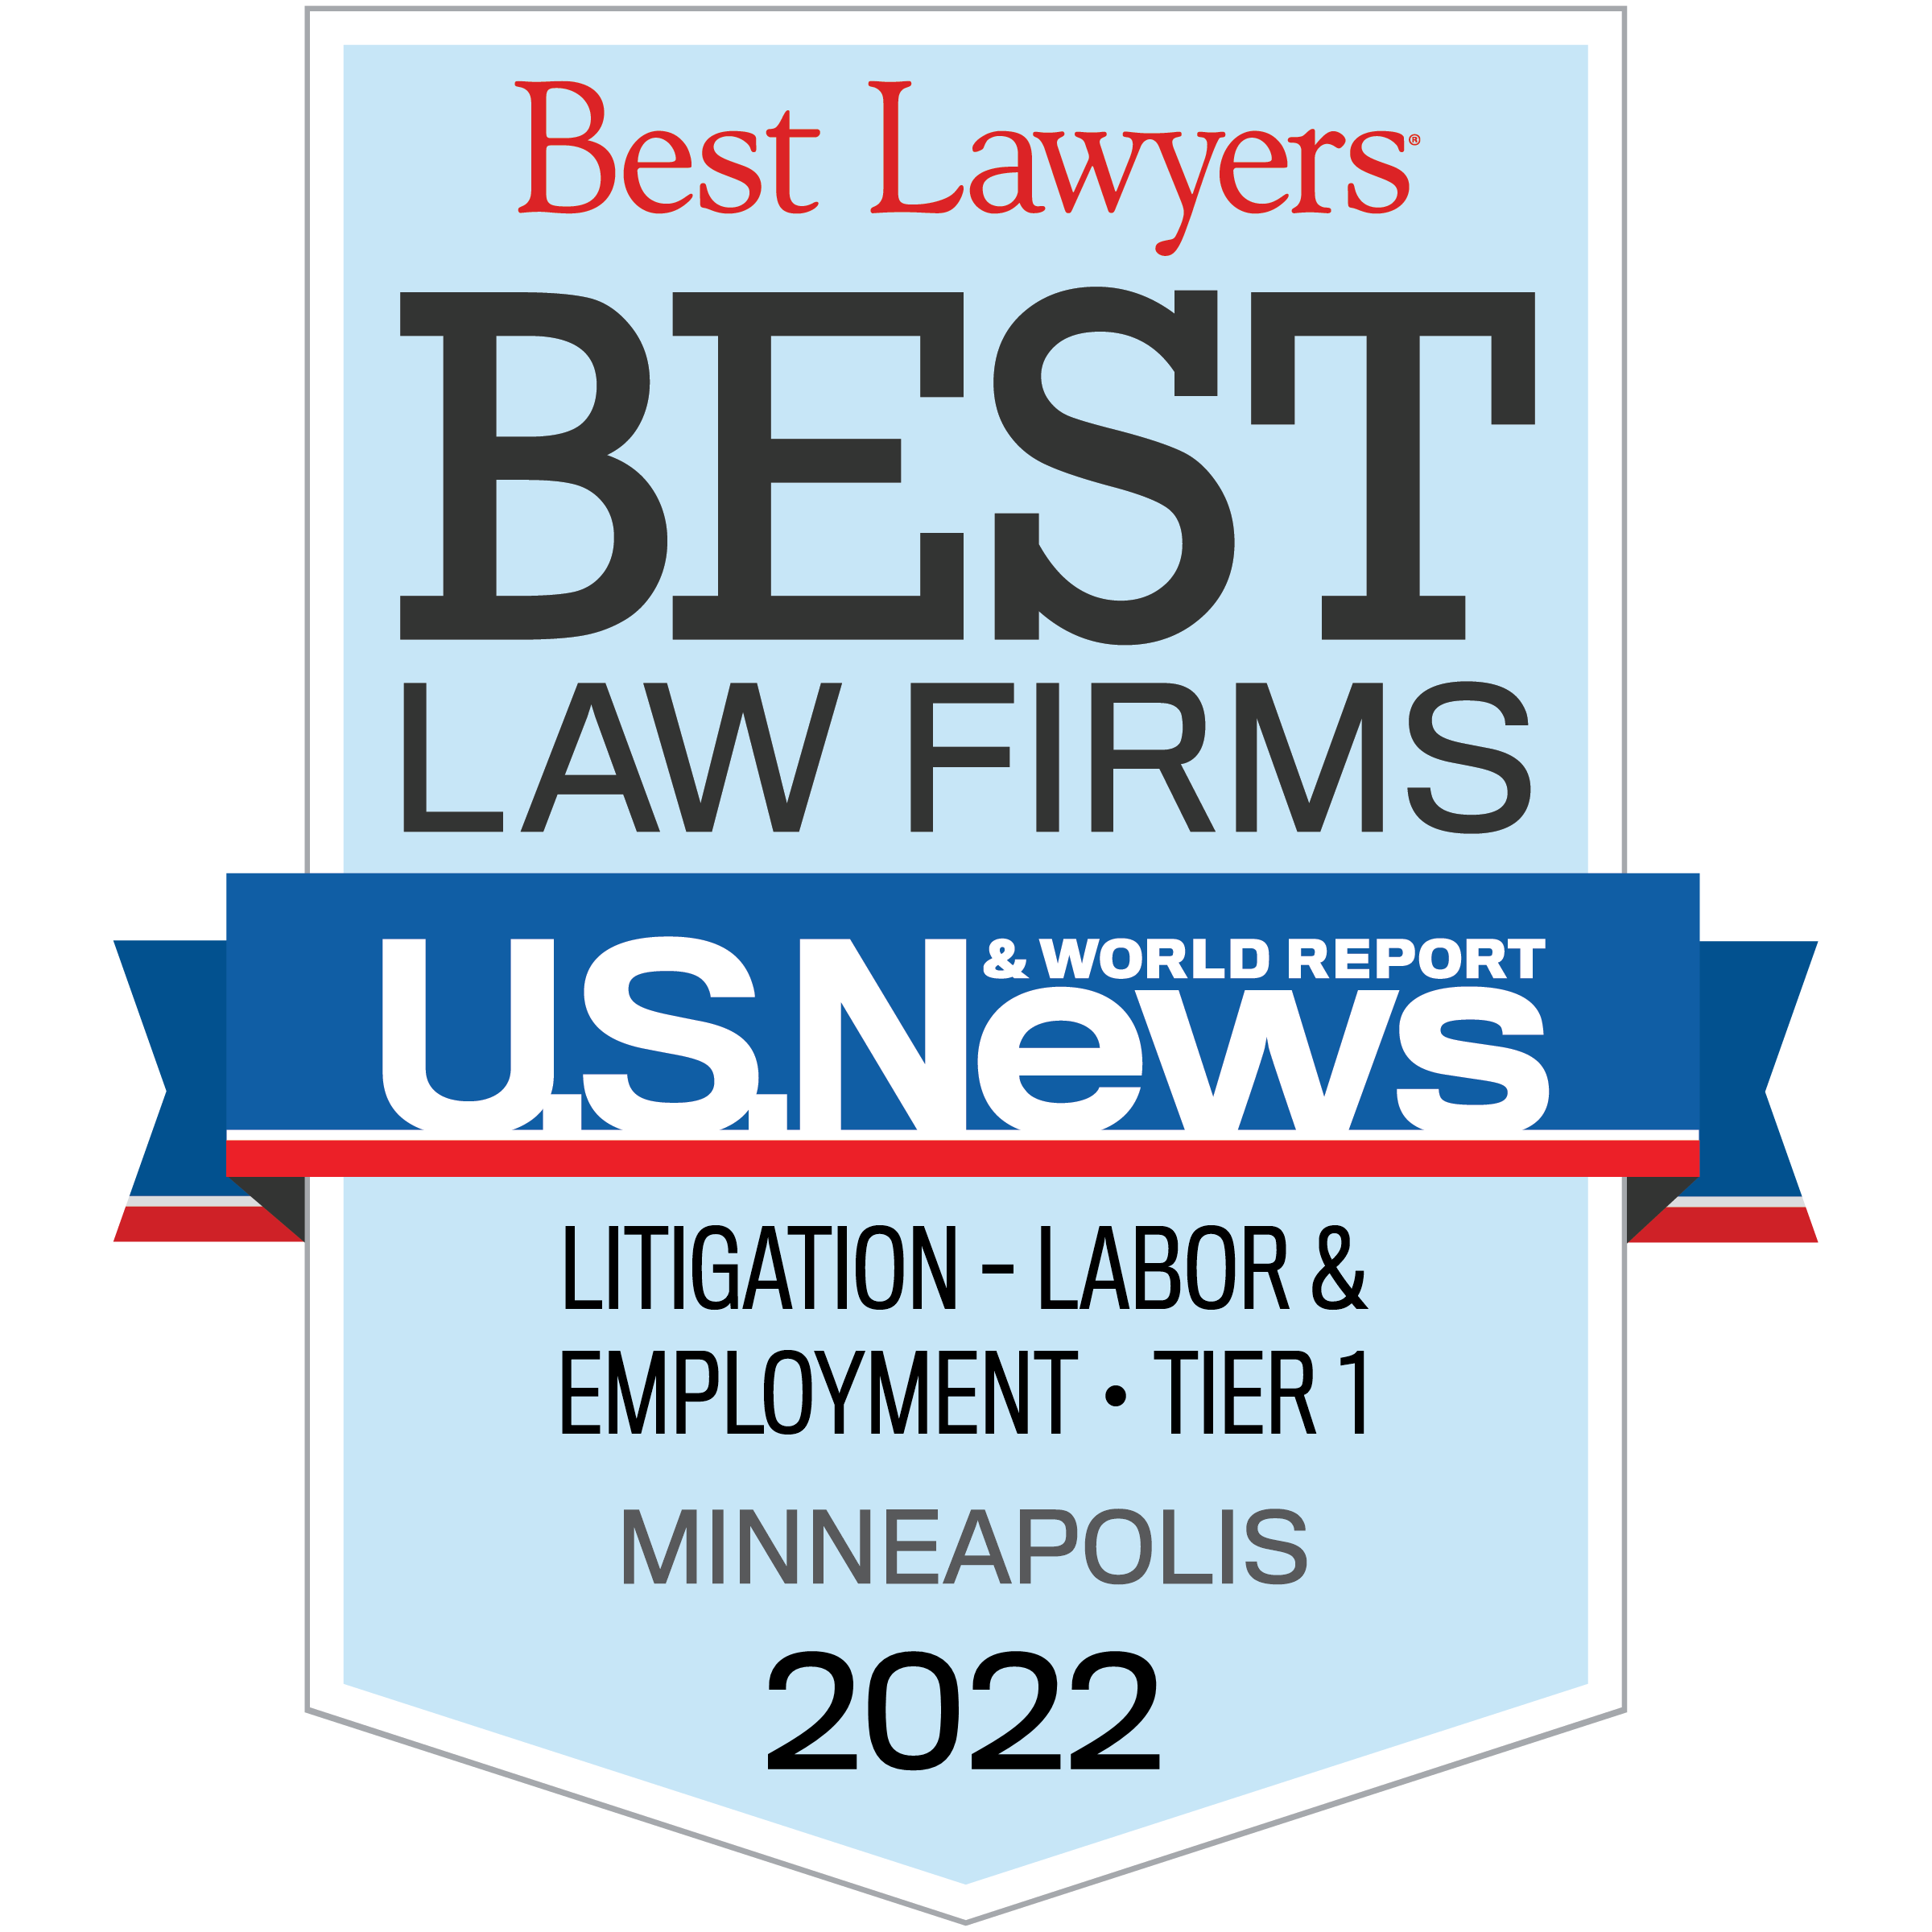 Best Lawyers Best Law Firms Minneapolis 2022